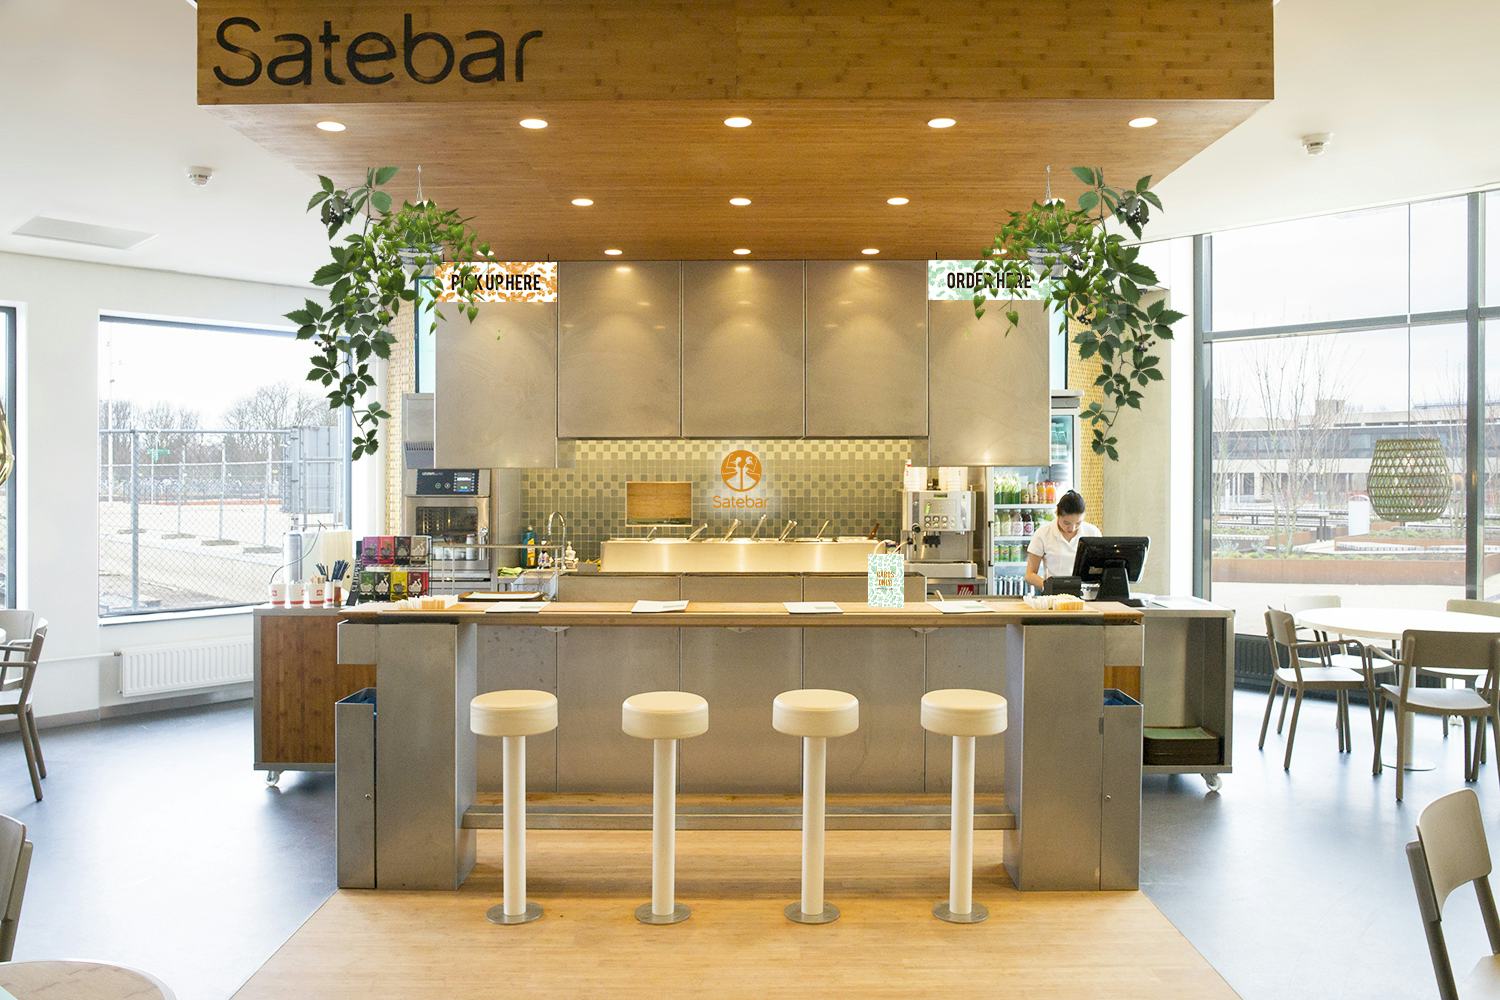 Restaurantketen Satebar wordt franchiseformule